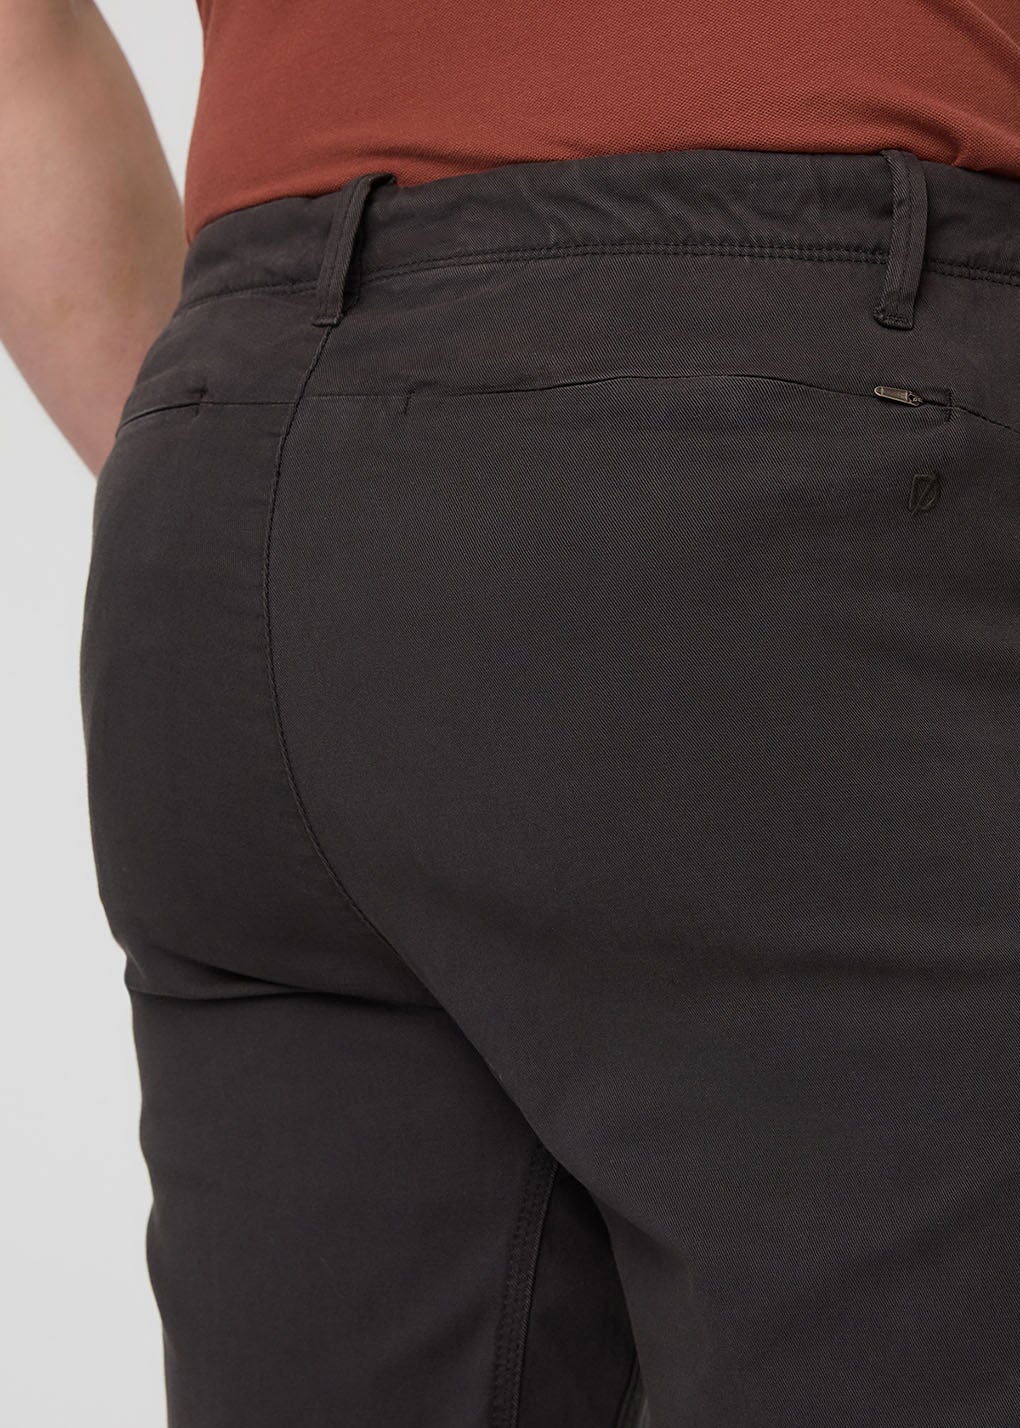 mens stretch dark grey chino pants back zip pocket closed